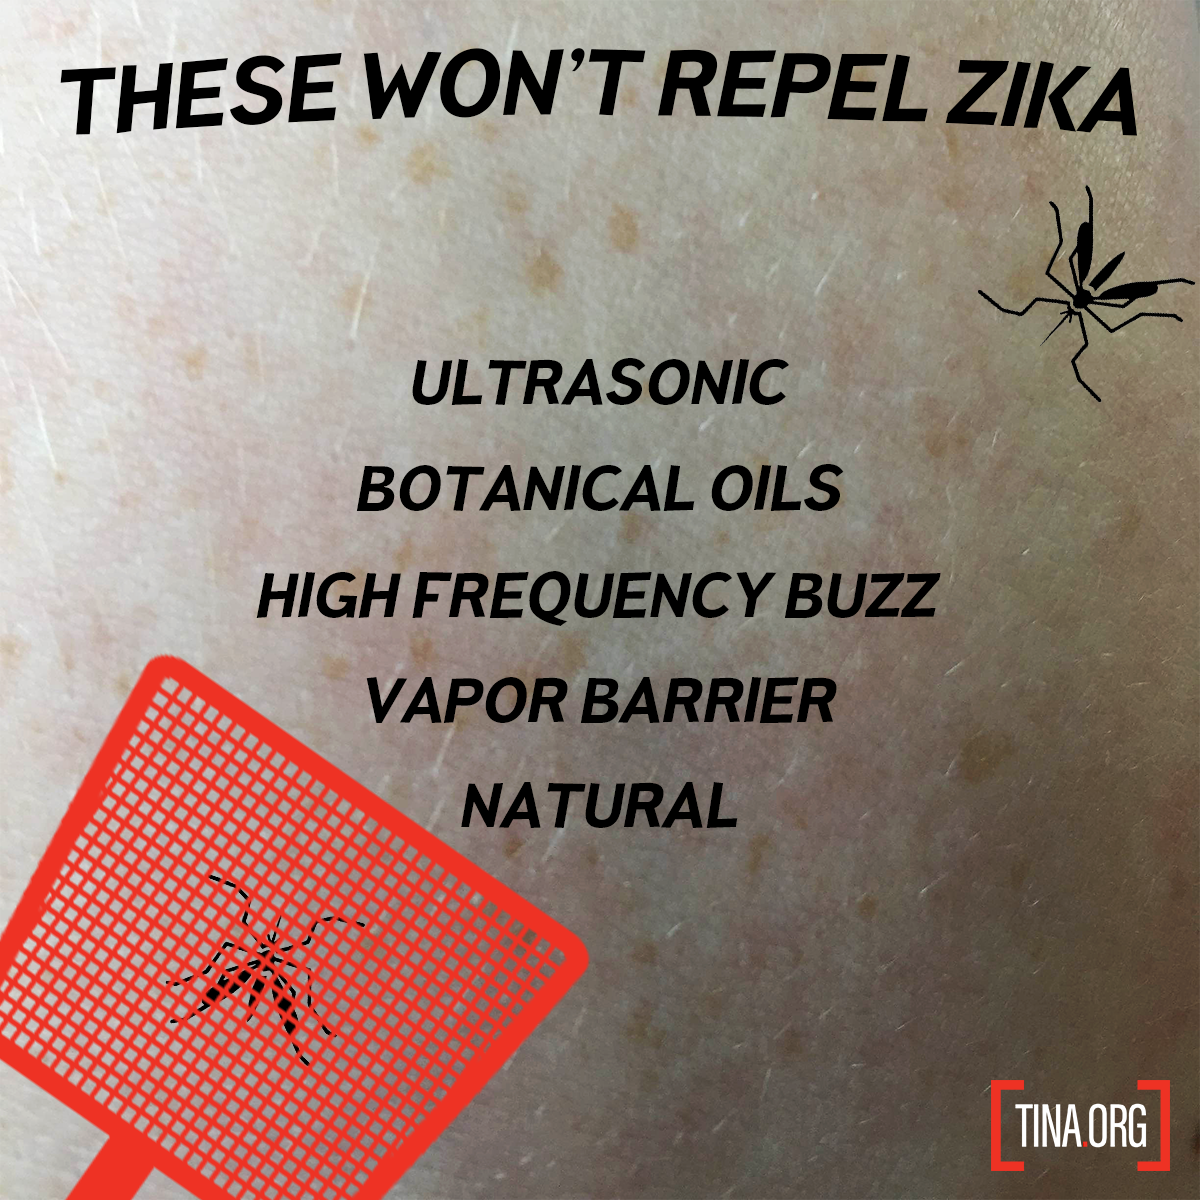 Zika Virus Product Claims List